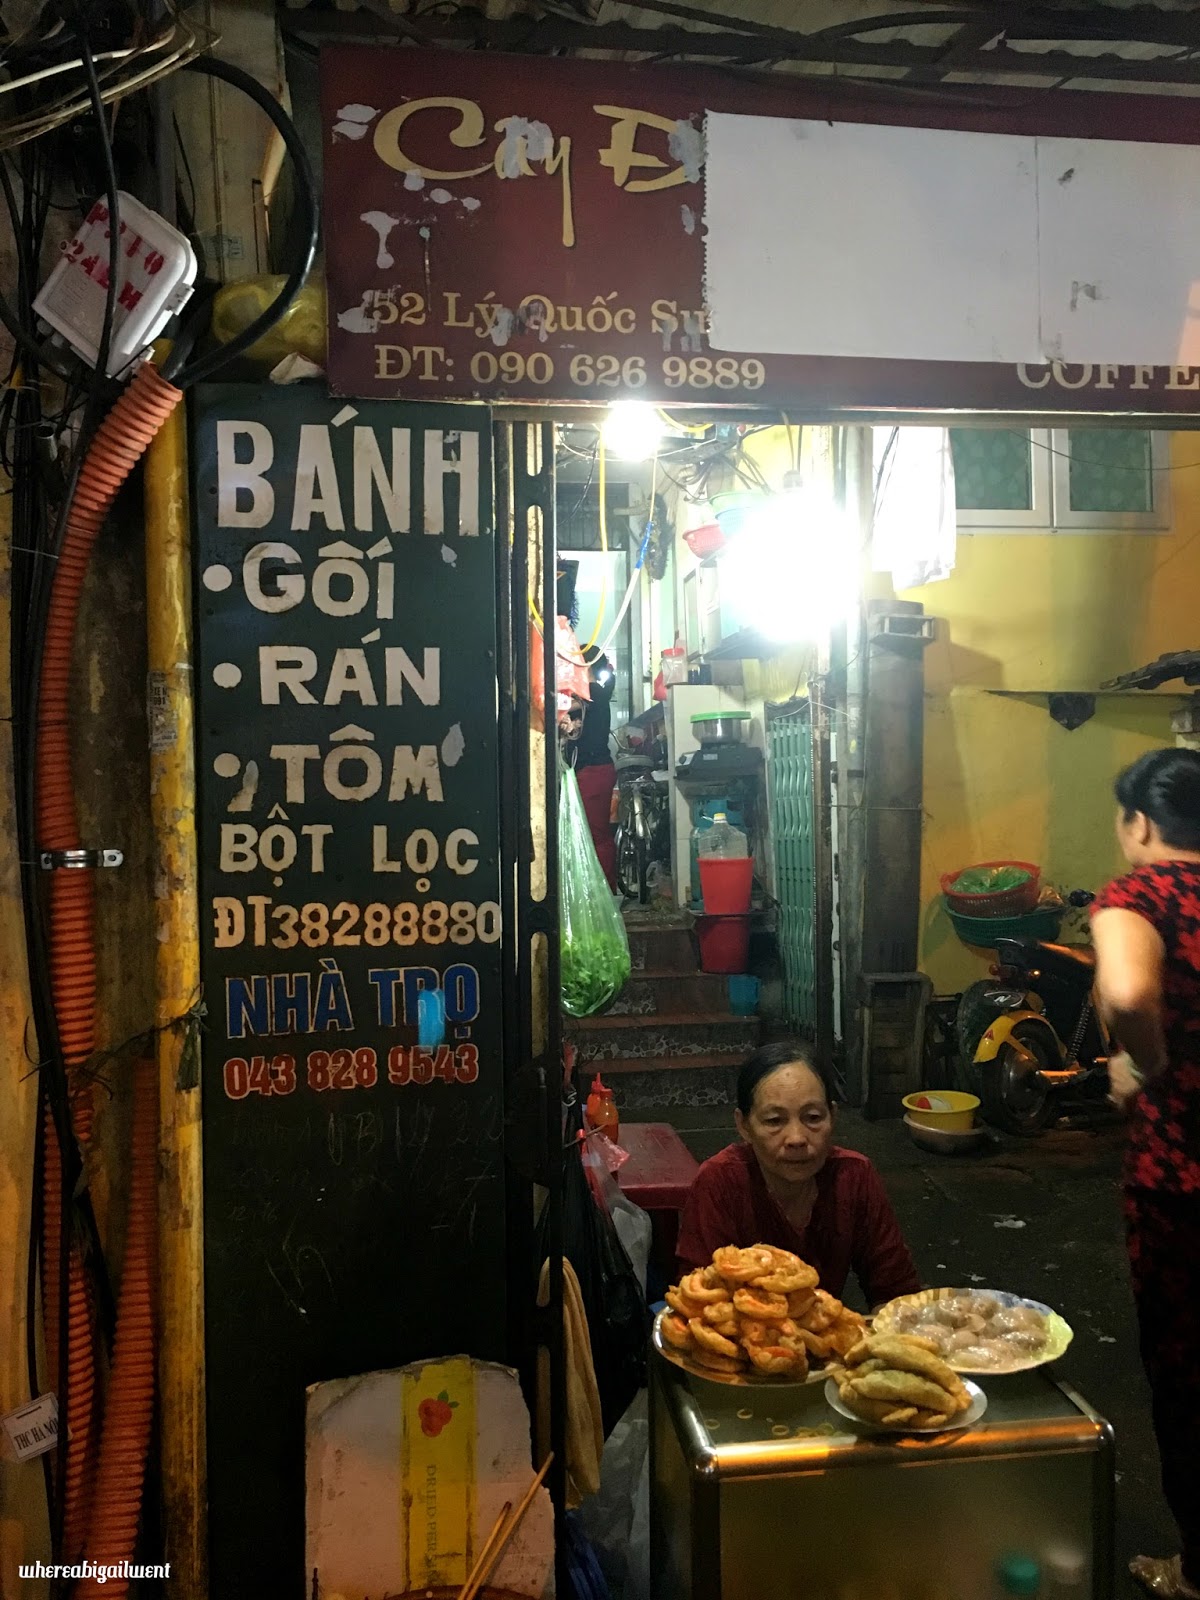 The Old Quarter Neighborhood of Hanoi